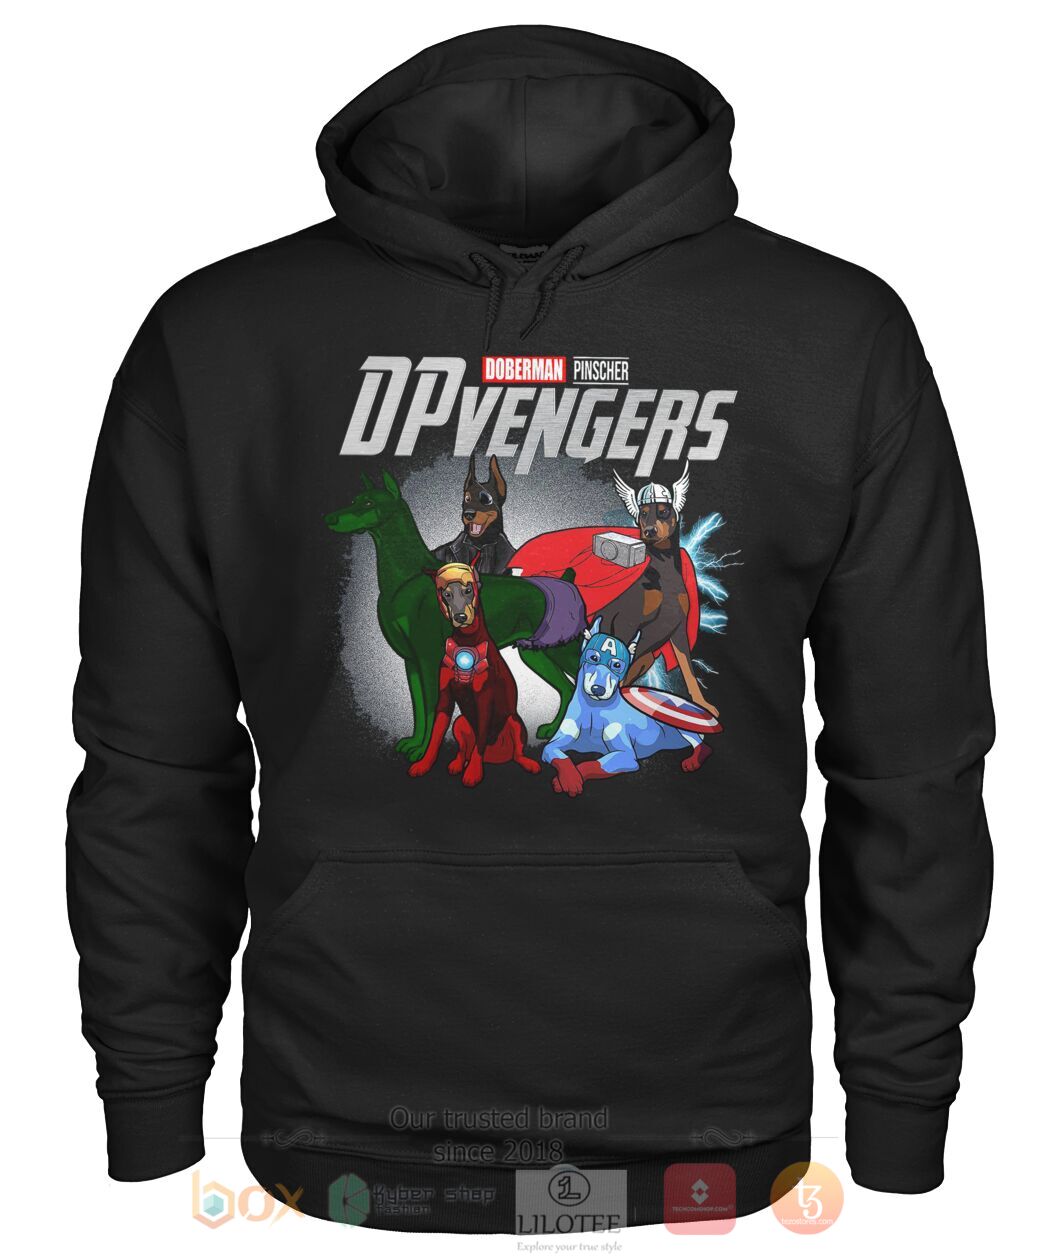 Doberman Dpvengers 3D Hoodie Shirt 1